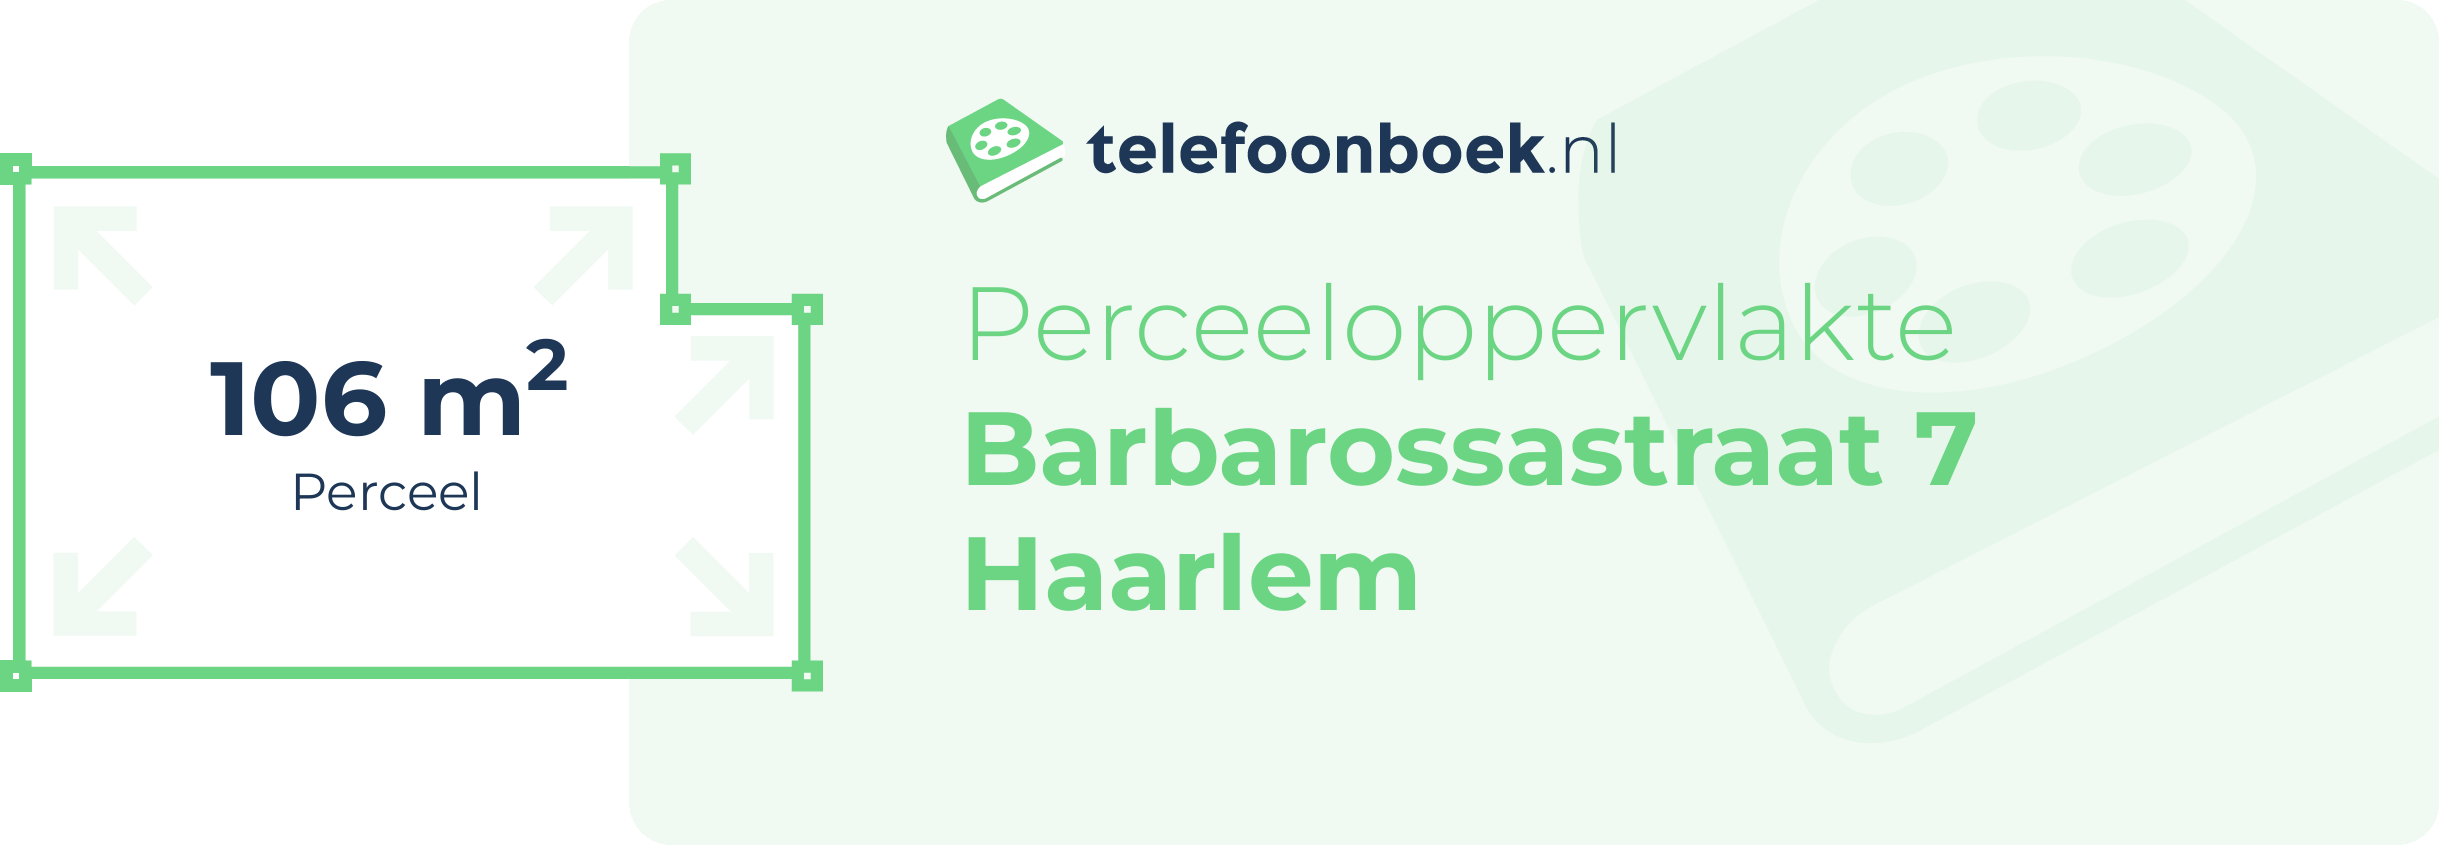 Perceeloppervlakte Barbarossastraat 7 Haarlem